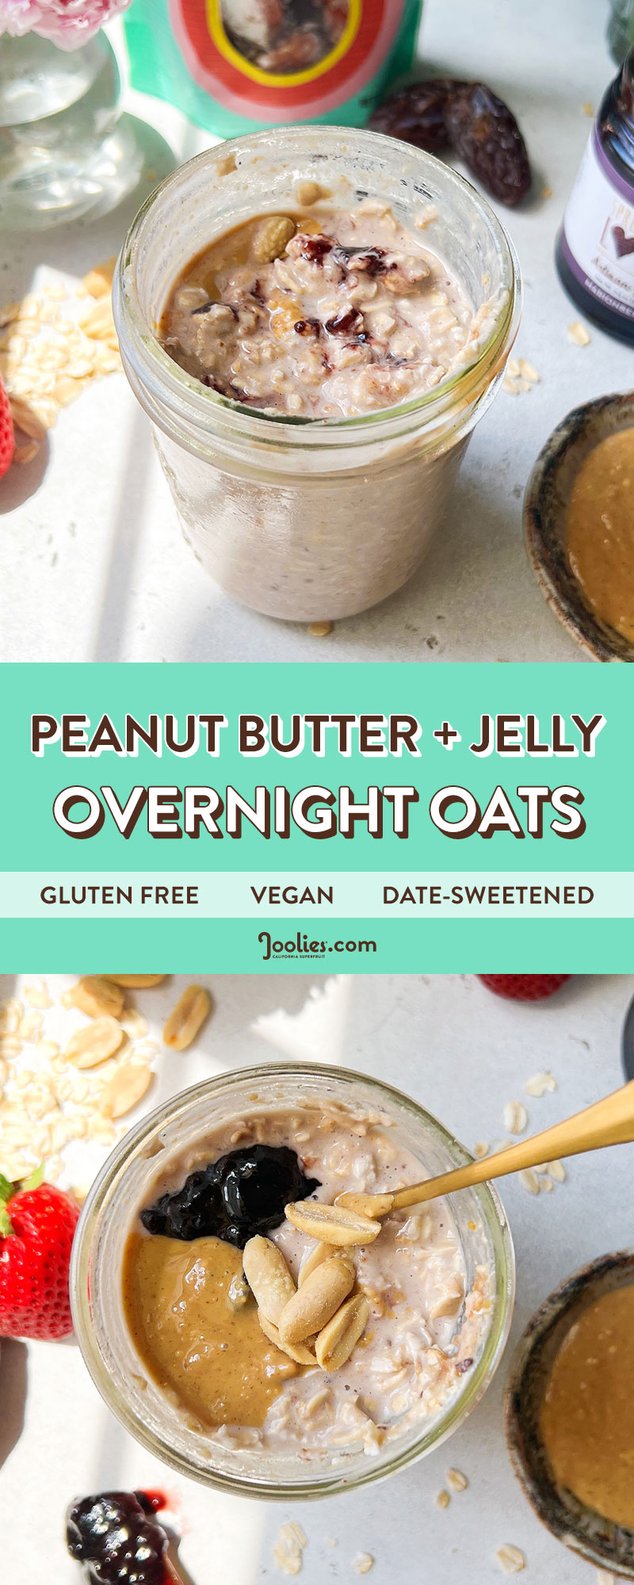 pbj-overnight-oats-PIN